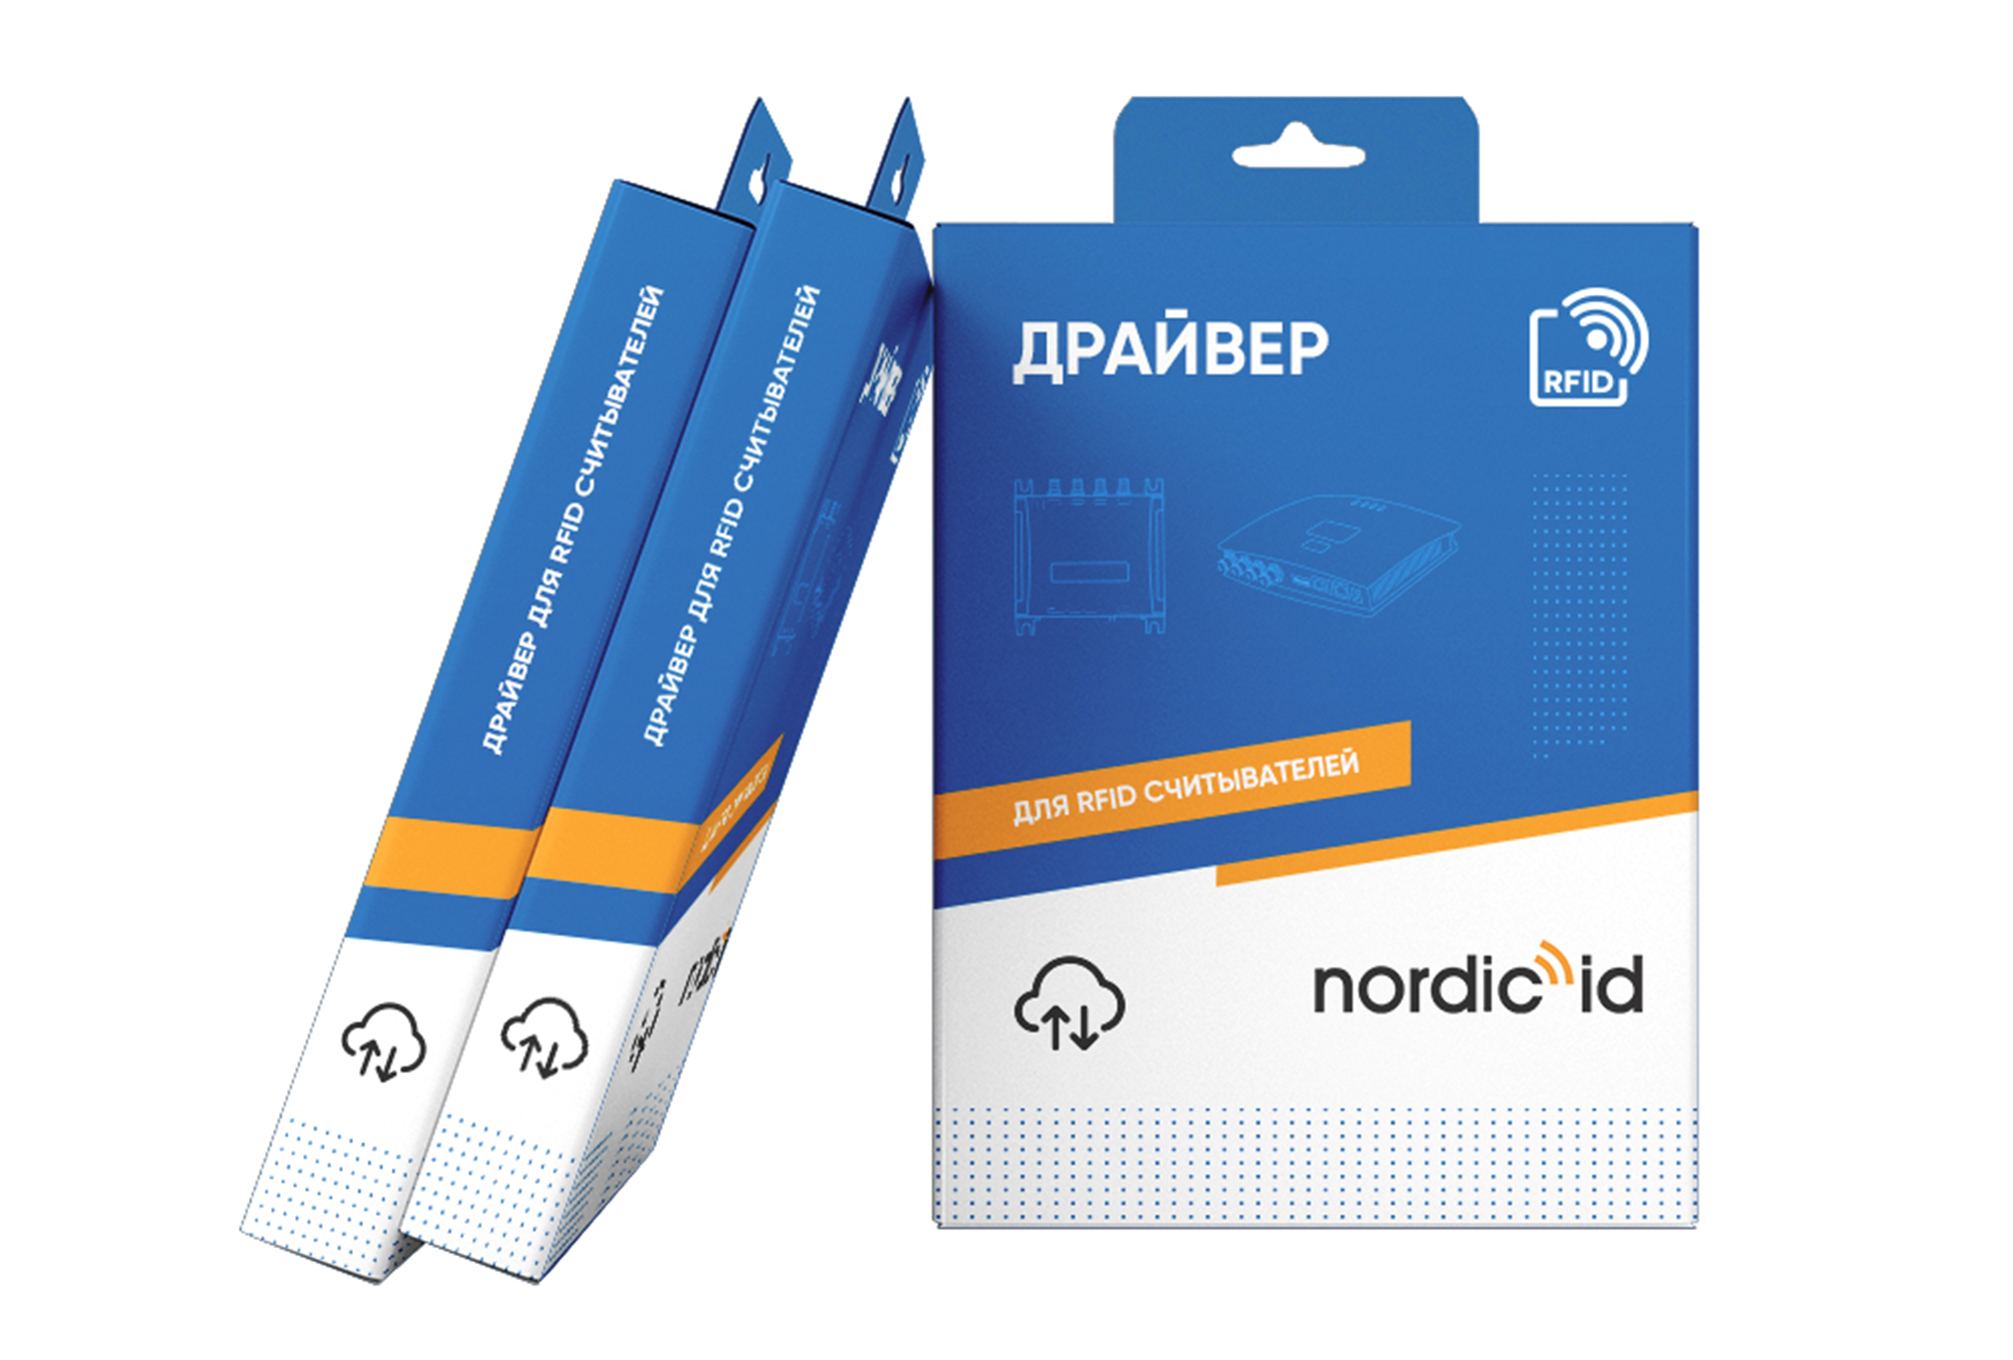 Драйвер для RFID считывателей Nordic ID